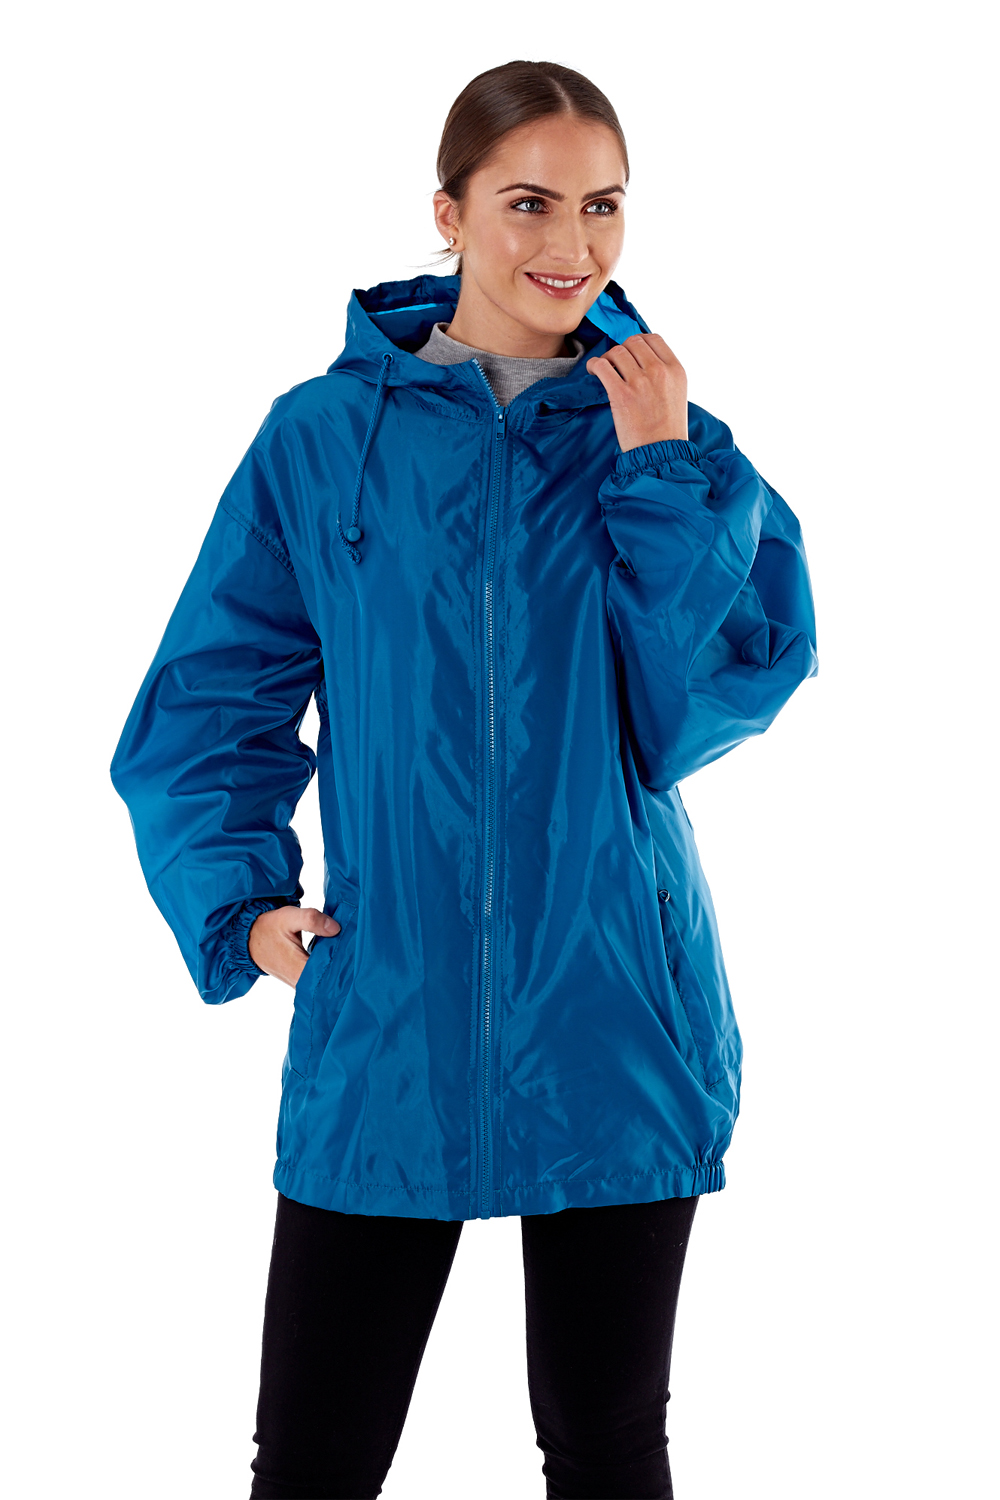 Mens kag in a bag Waterproof Jacket Lightweight Wind Resistant ProClimate